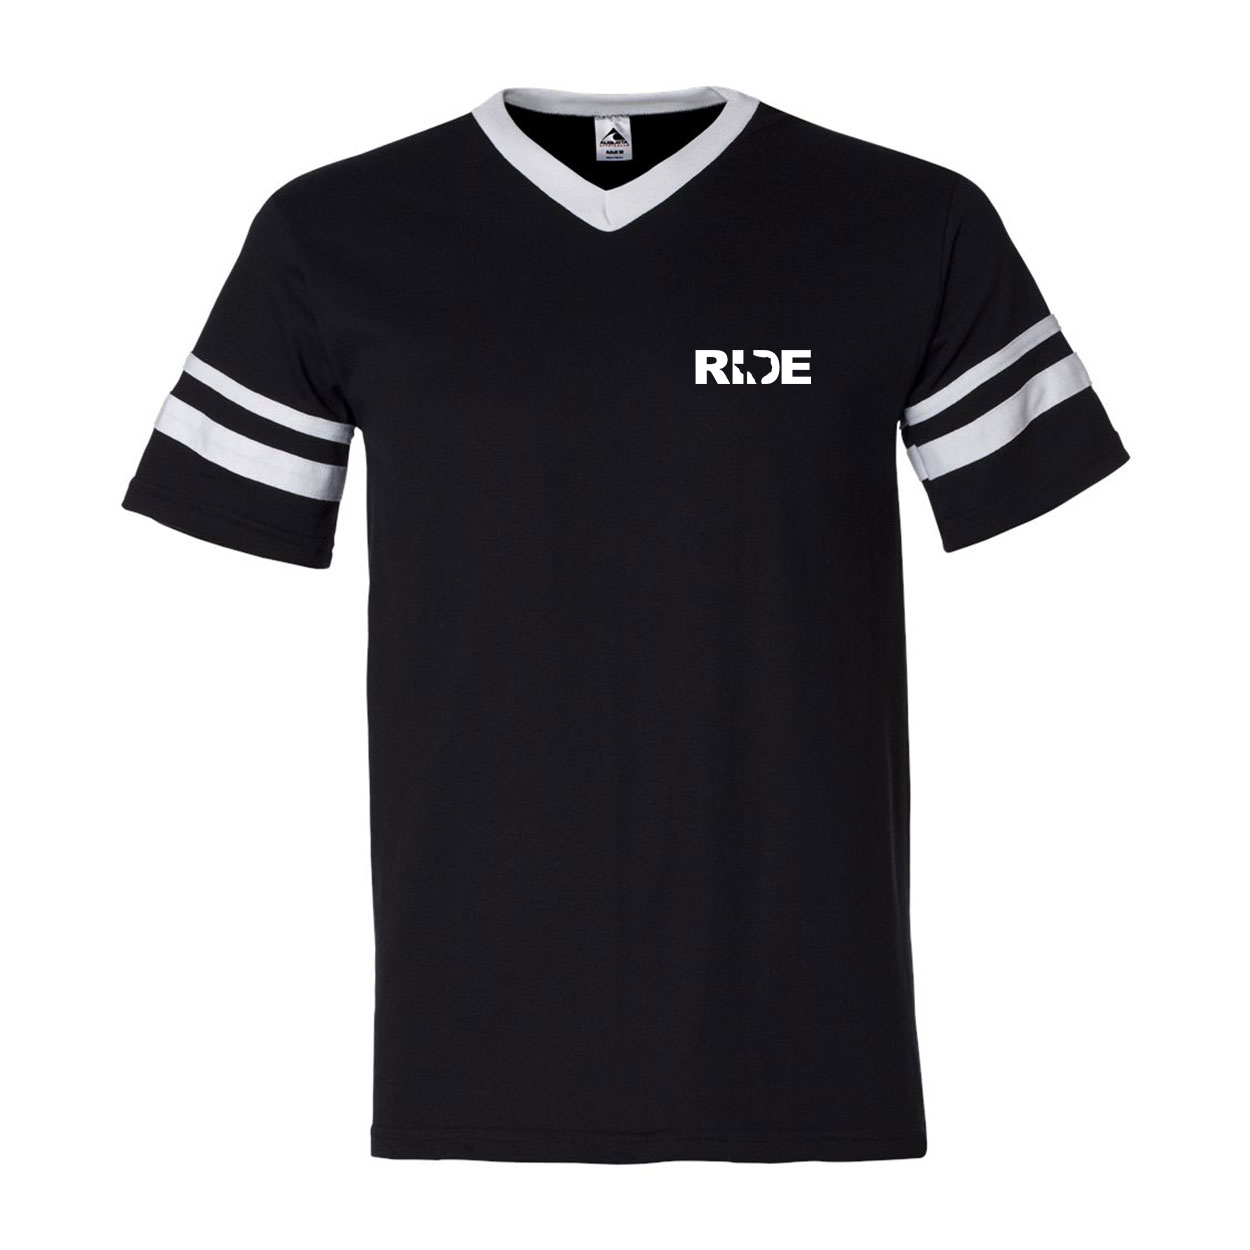 Ride Texas Night Out Premium Striped Jersey T-Shirt Black/White (White Logo)